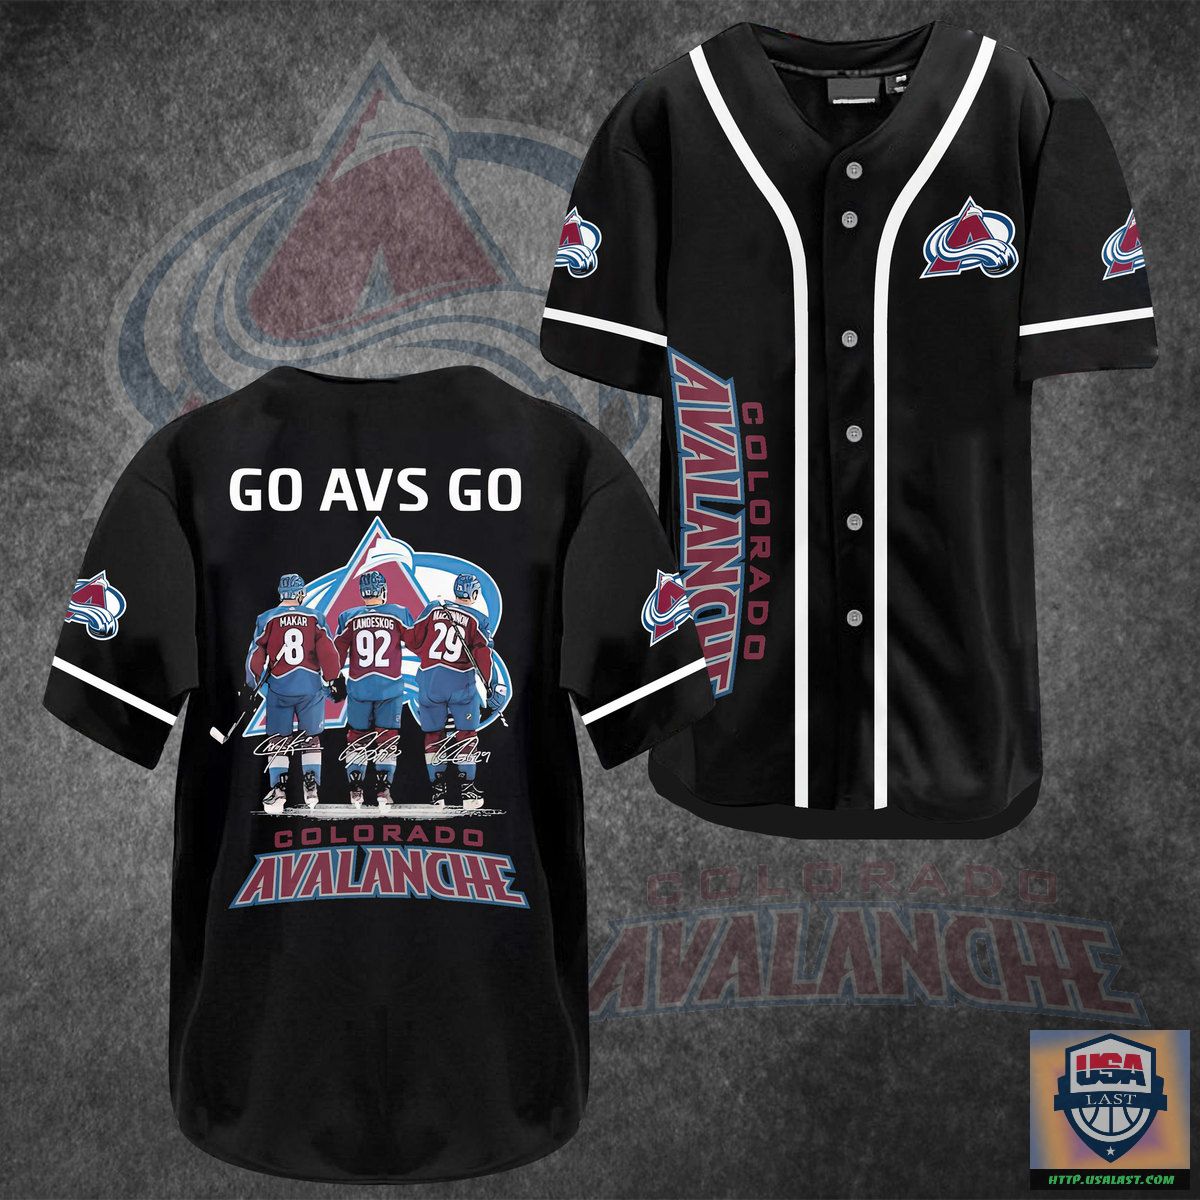 Go AVS Go Colorado Avalanche Baseball Jersey Shirt – Usalast